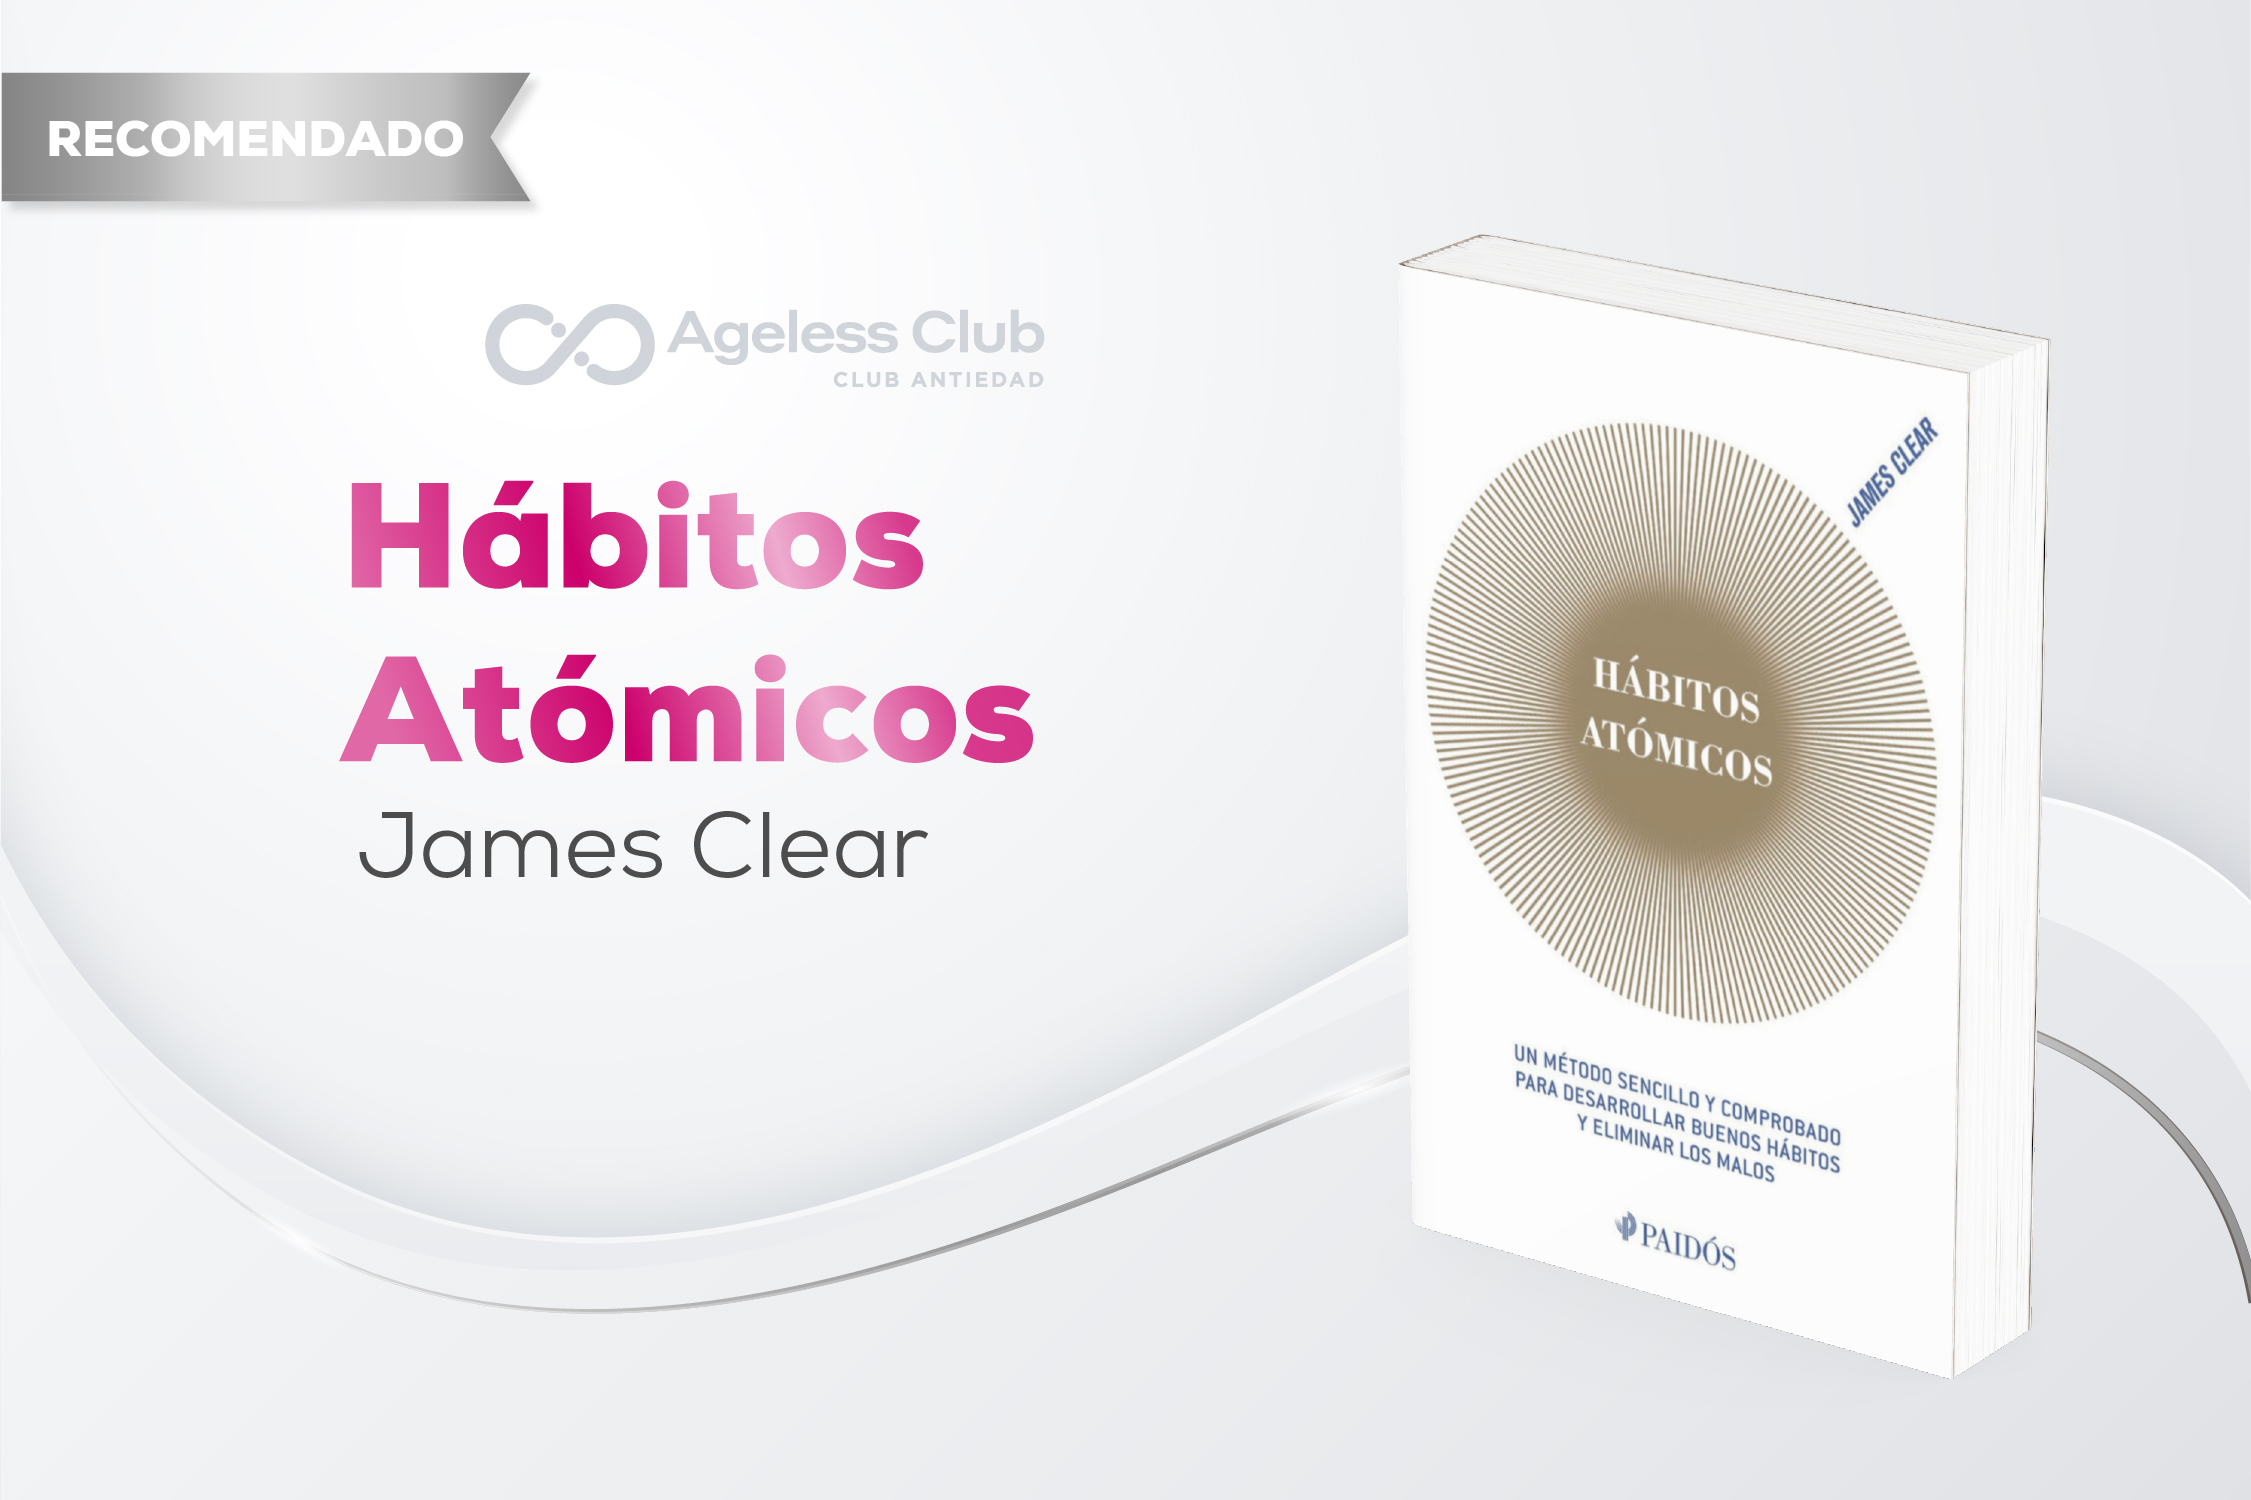 HABITOS ATOMICOS, JAMES CLEAR